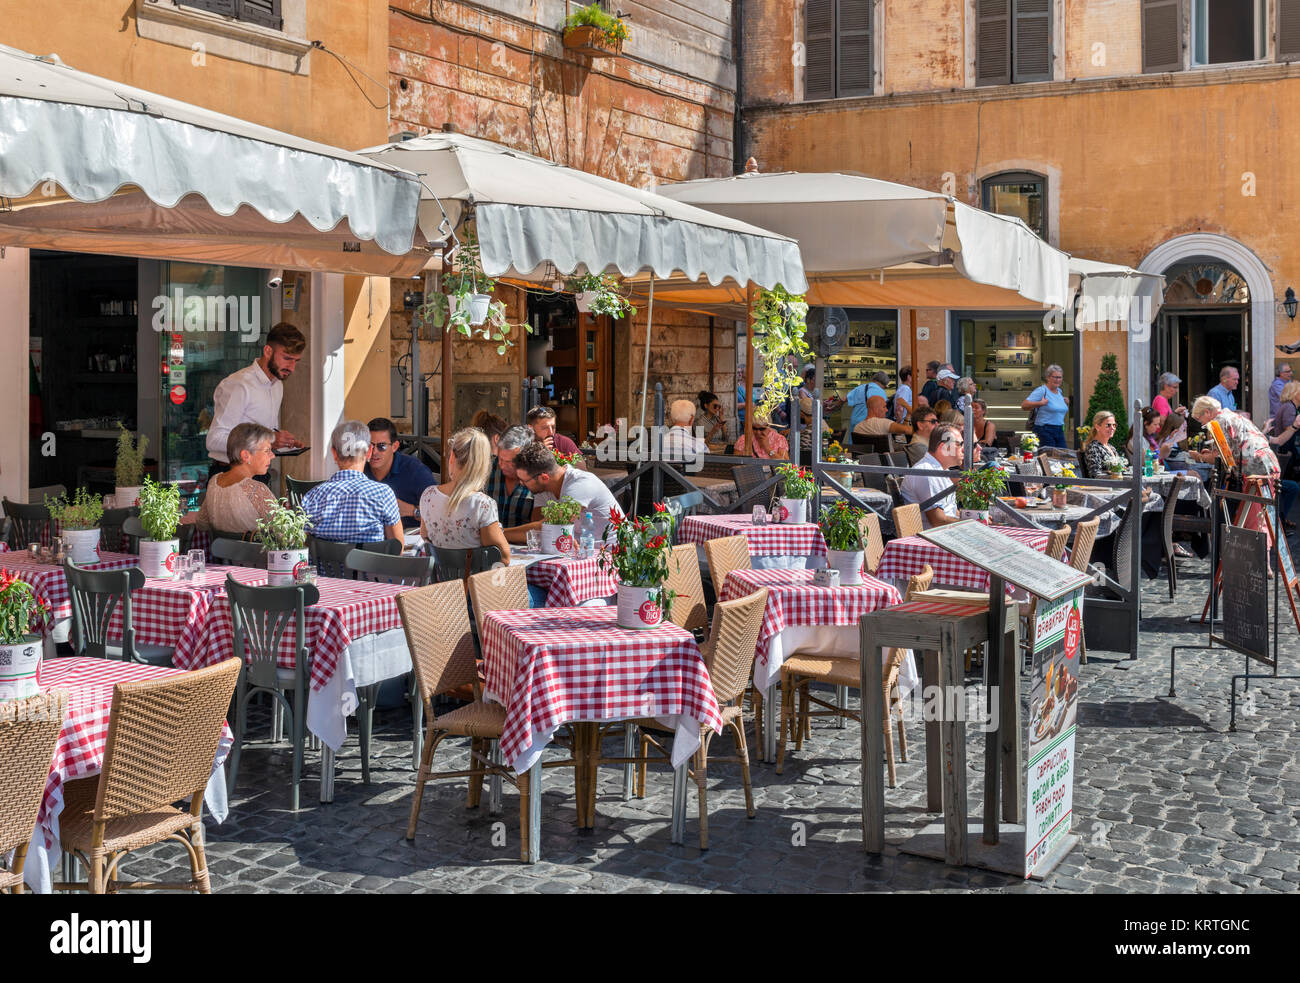 Bürgersteig Restaurant an der Piazza della Rotonda im centro storico, Rom, Italien Stockfoto